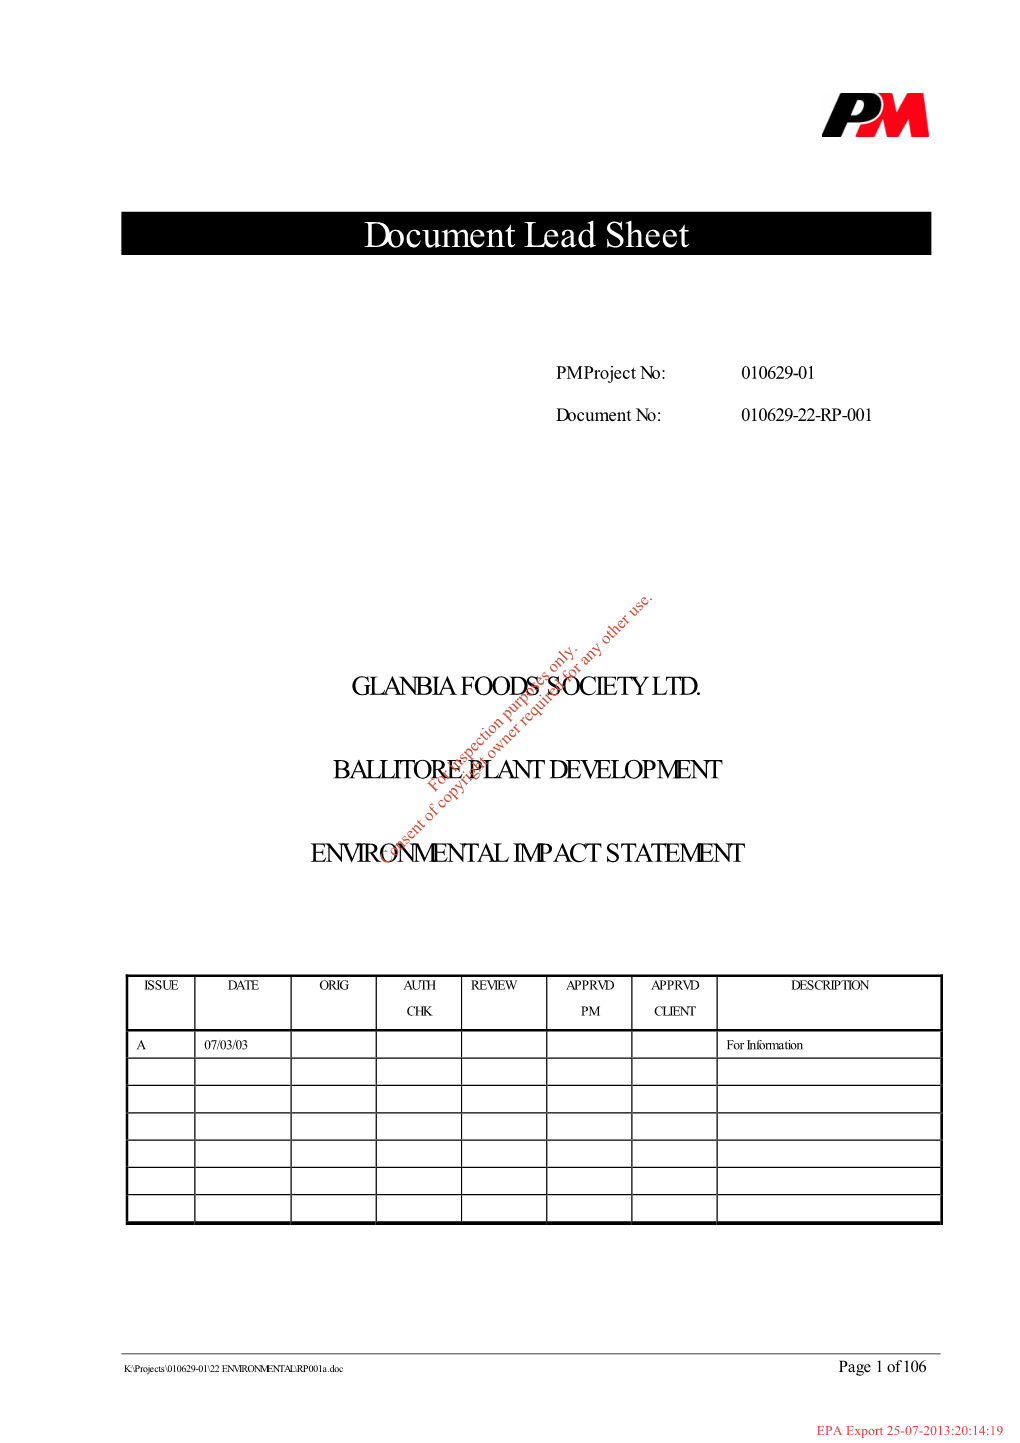 Document Lead Sheet